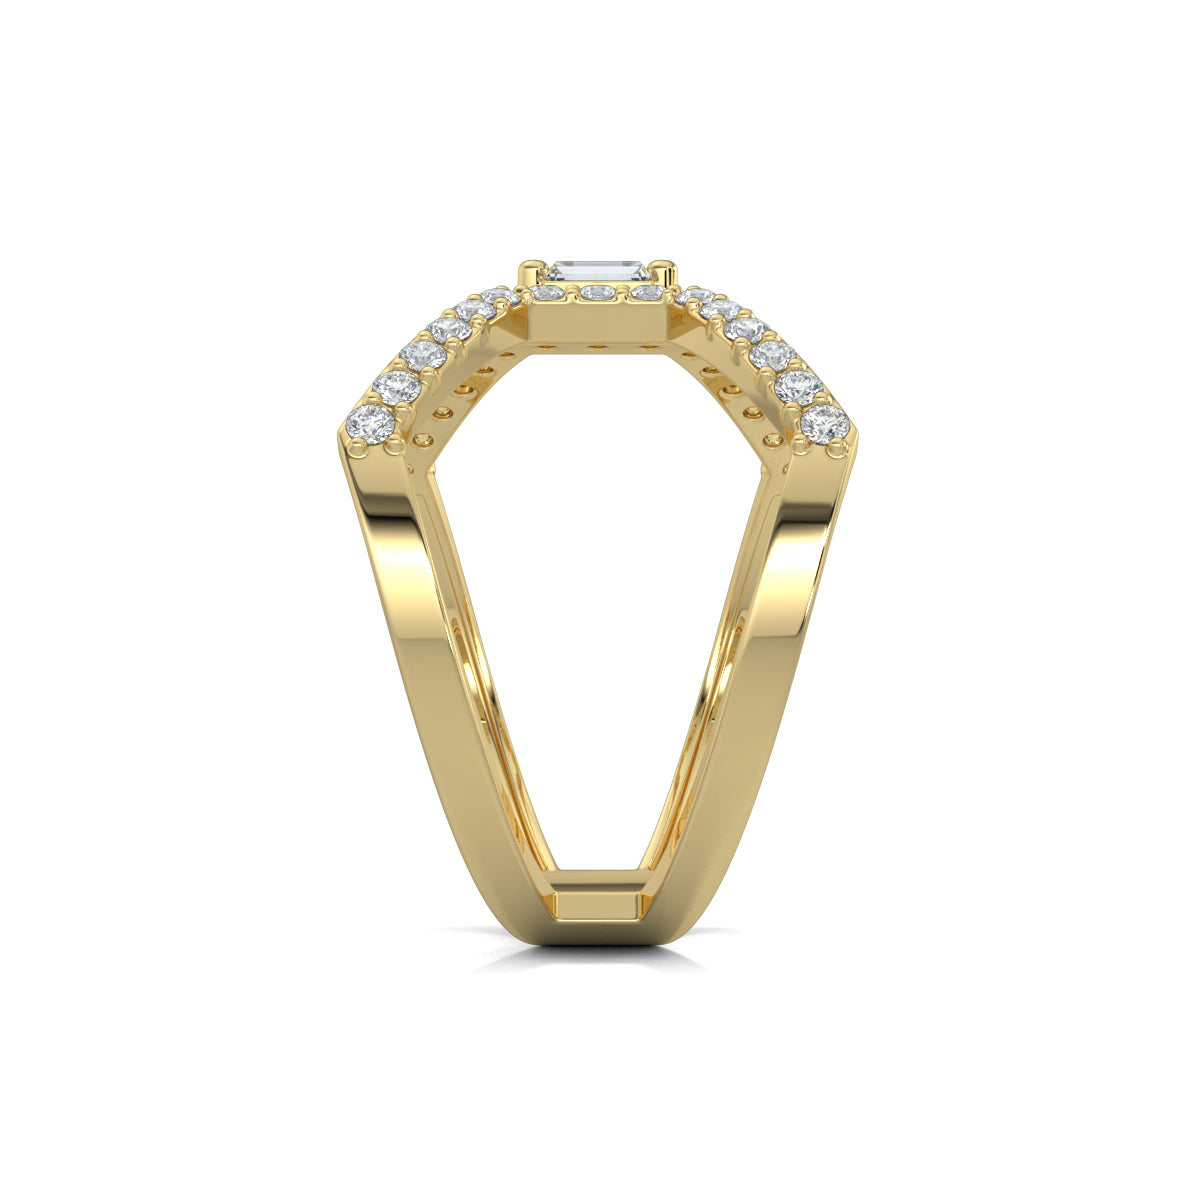 Yellow Gold, Diamond Ring, Natural diamond ring, Lab-grown diamond ring, everyday ring, split shank design, butterfly ring, baguette diamond, round diamonds, fashion jewelry, exquisite elegance.